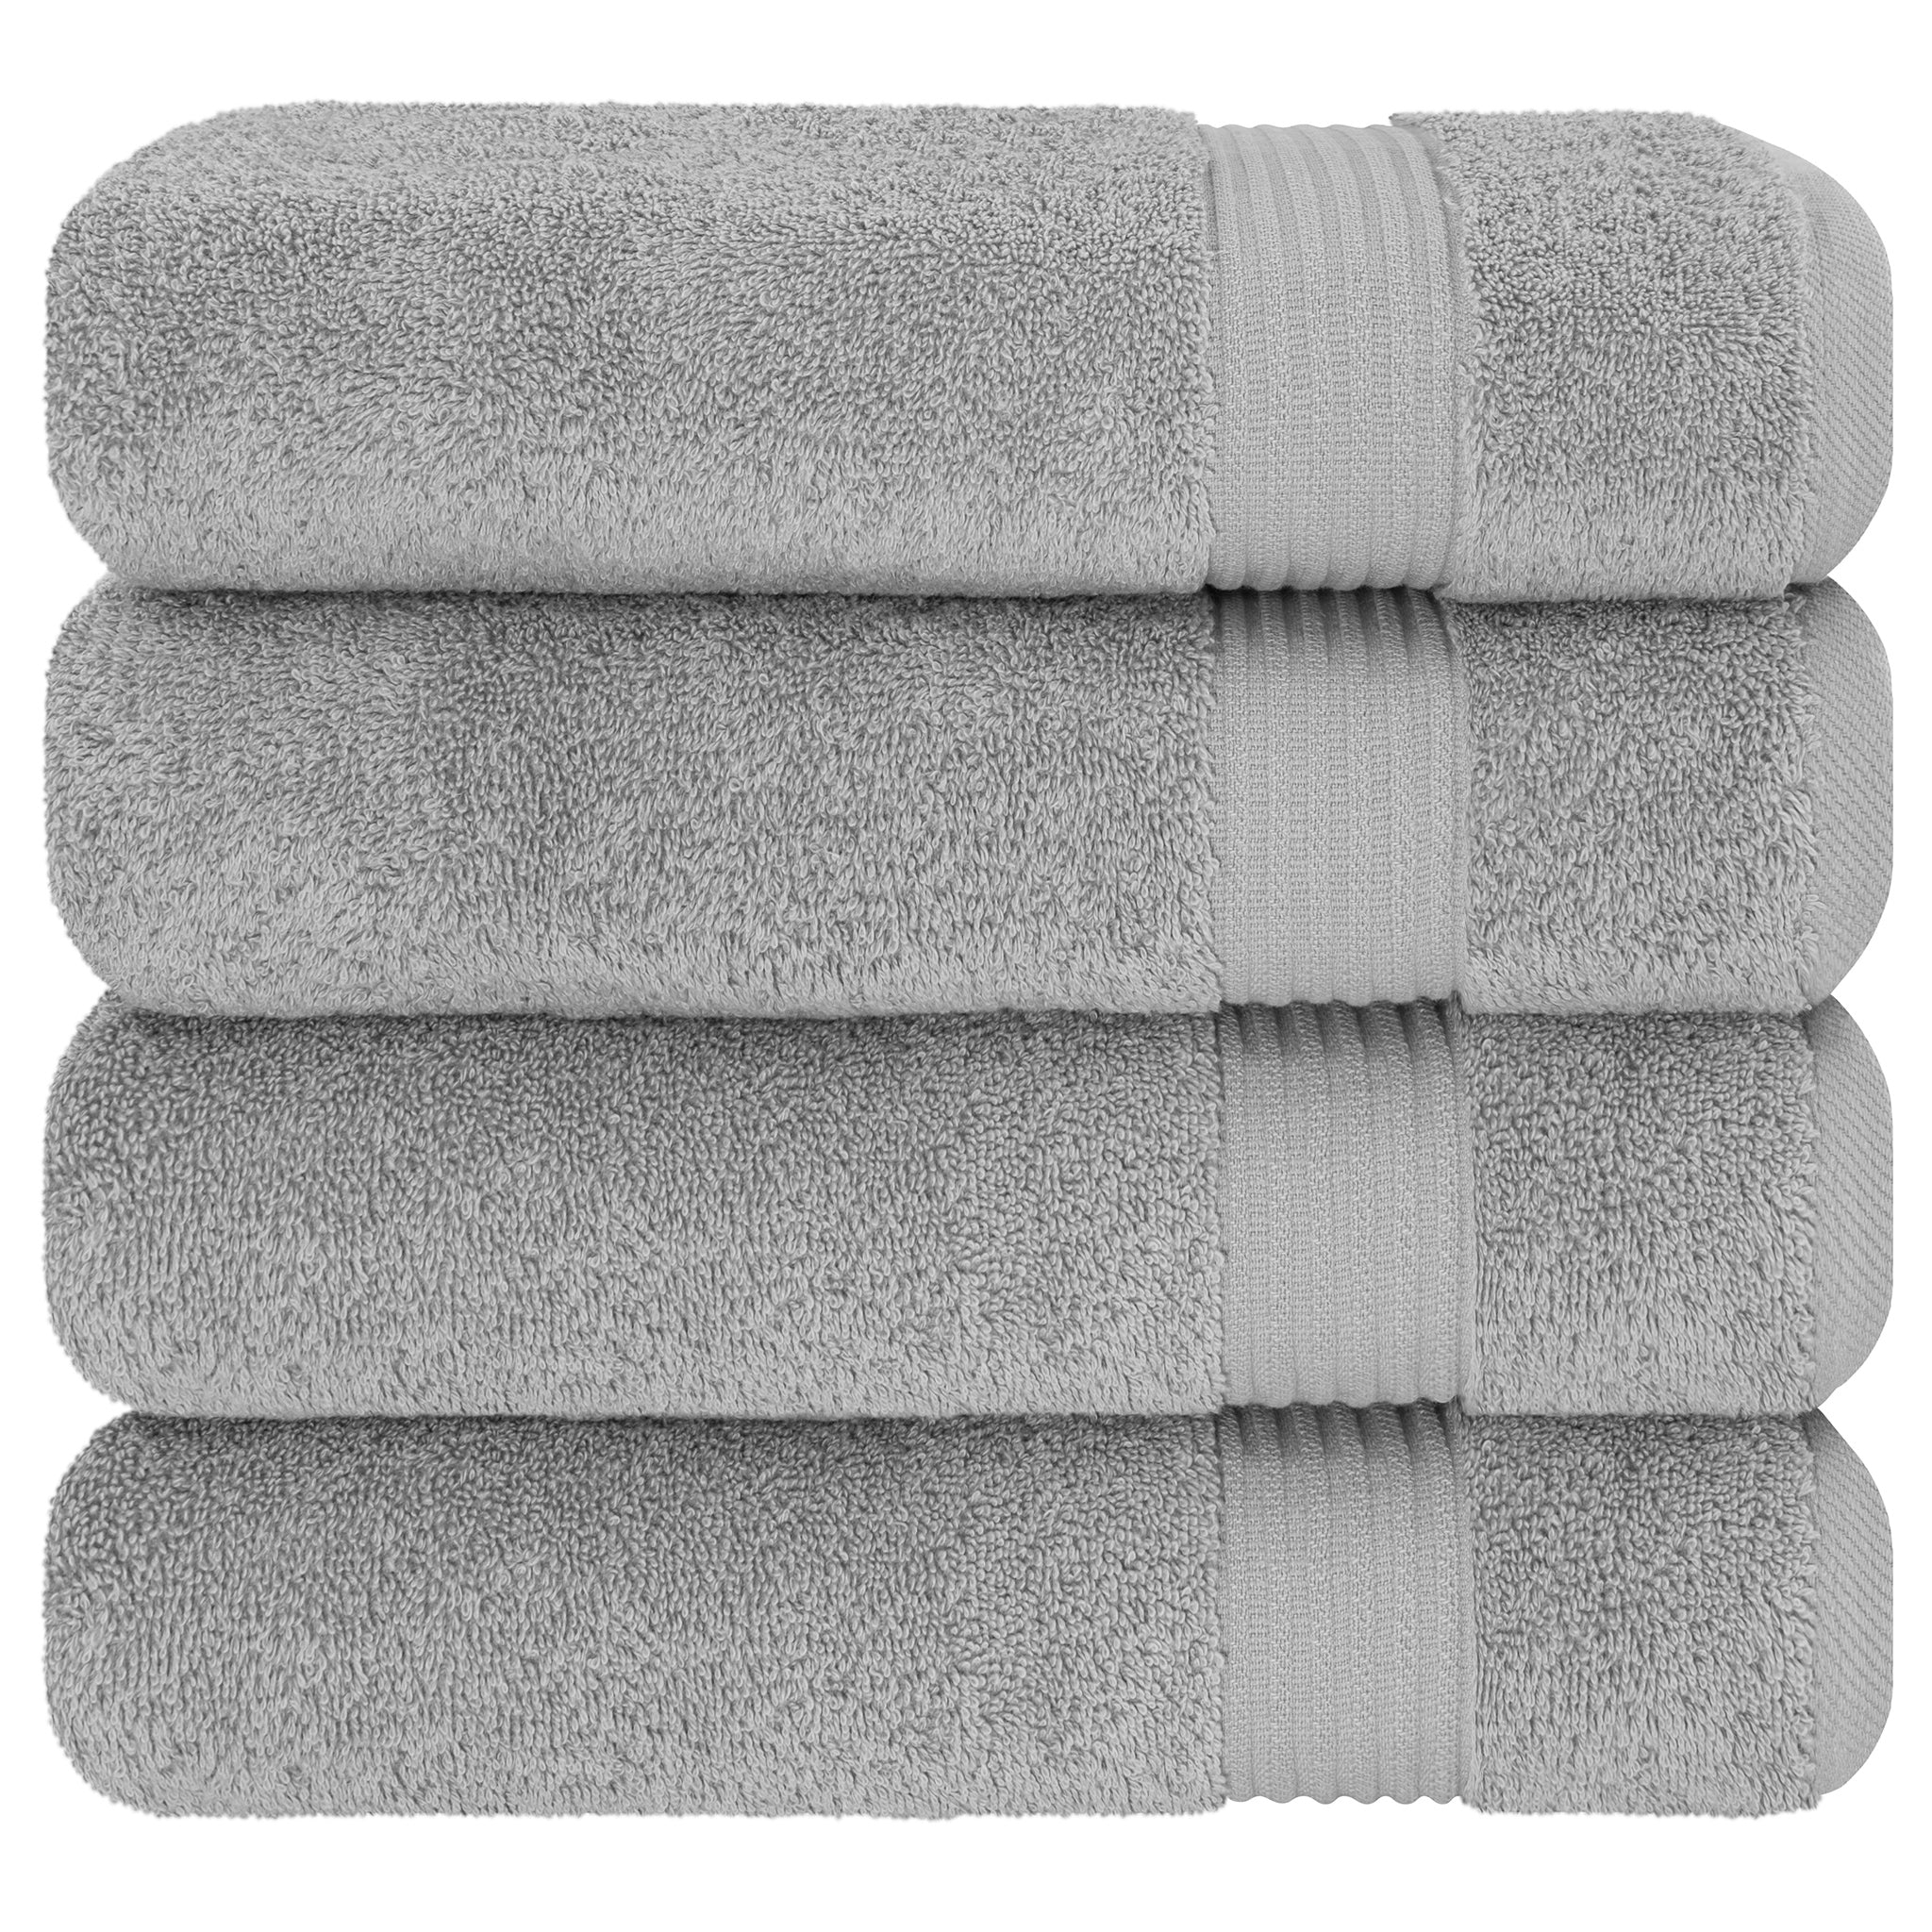 American Soft Linen Bekos 100% Cotton Turkish Towels, 4 Piece Bath Towel Set -rockridge-gray-06